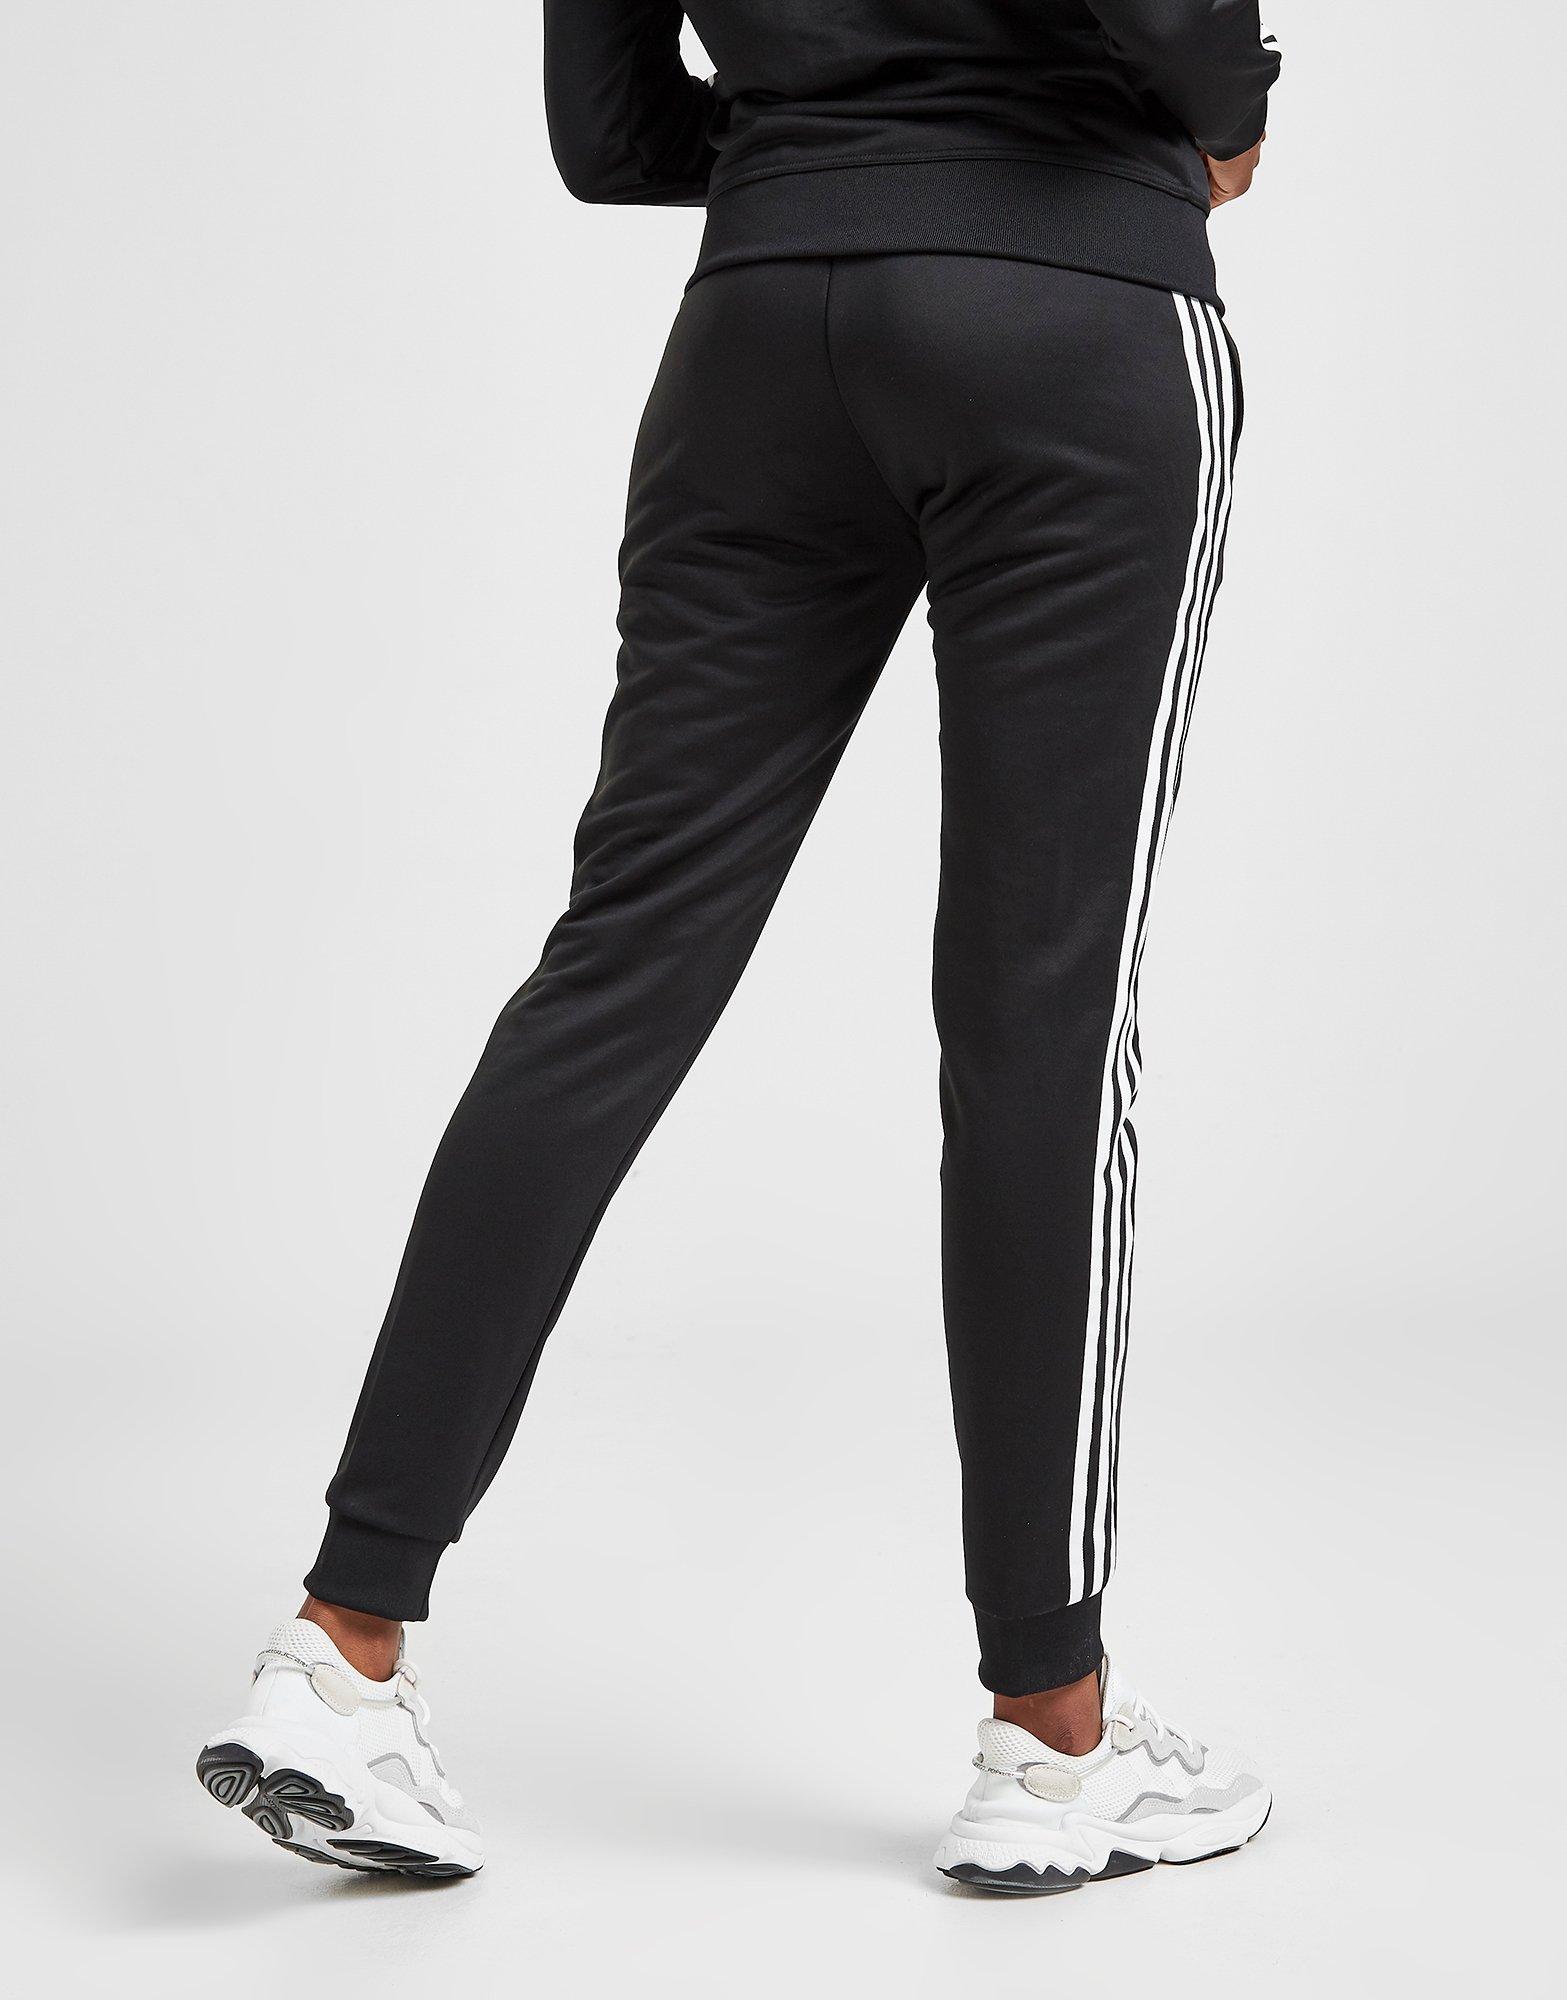 Buy Black adidas Originals 3-Stripes Linear Poly Pants